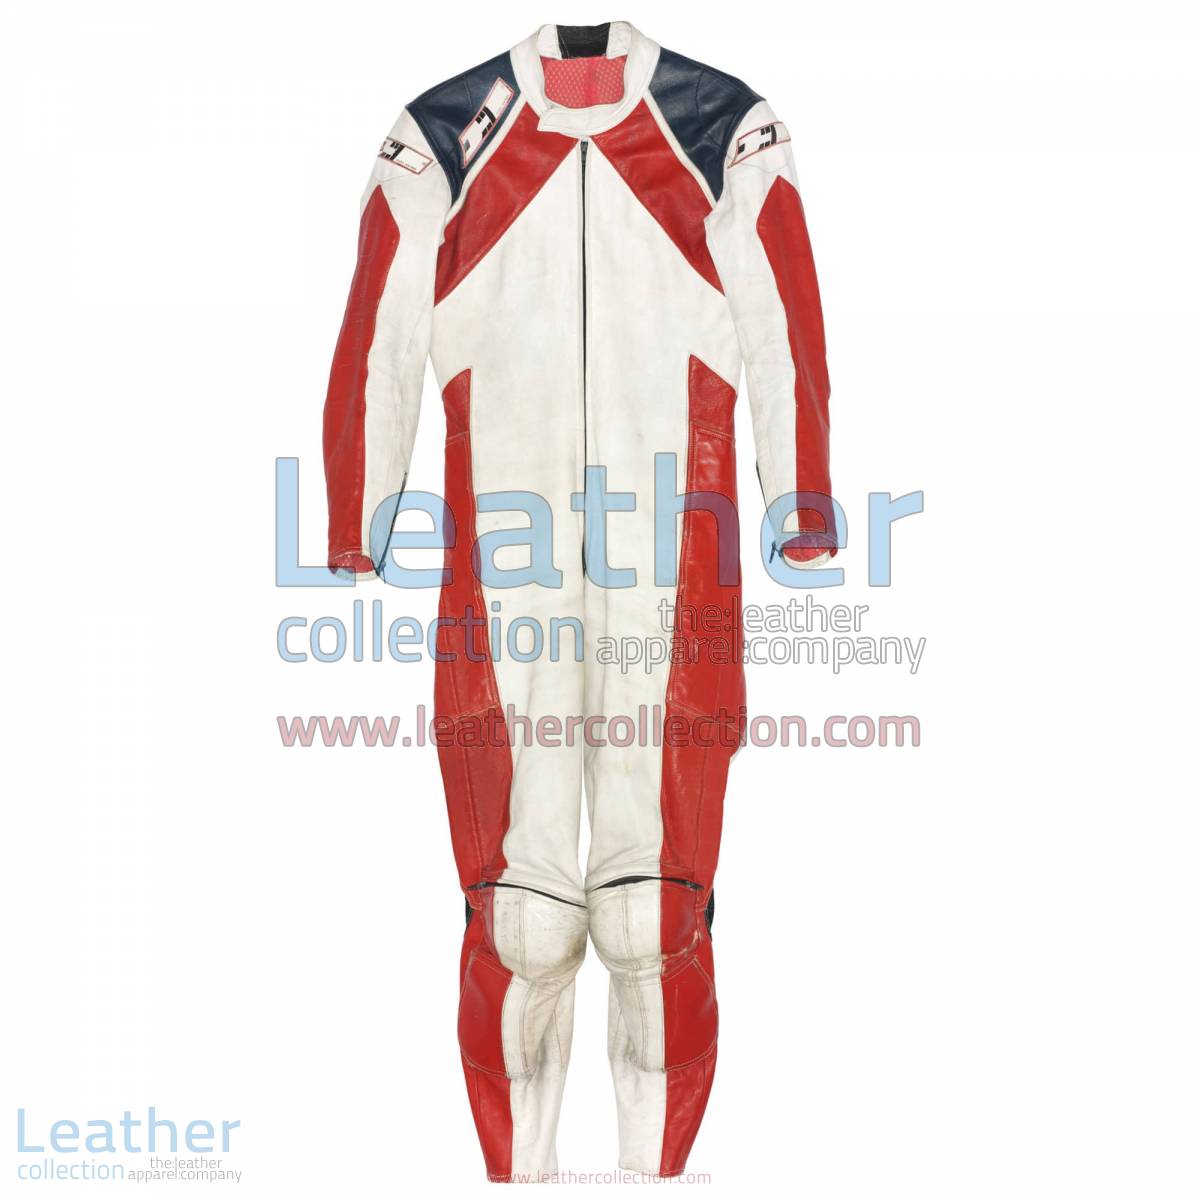 Mario Lega Ducati 1979 Racing Suit | ducati racing suit